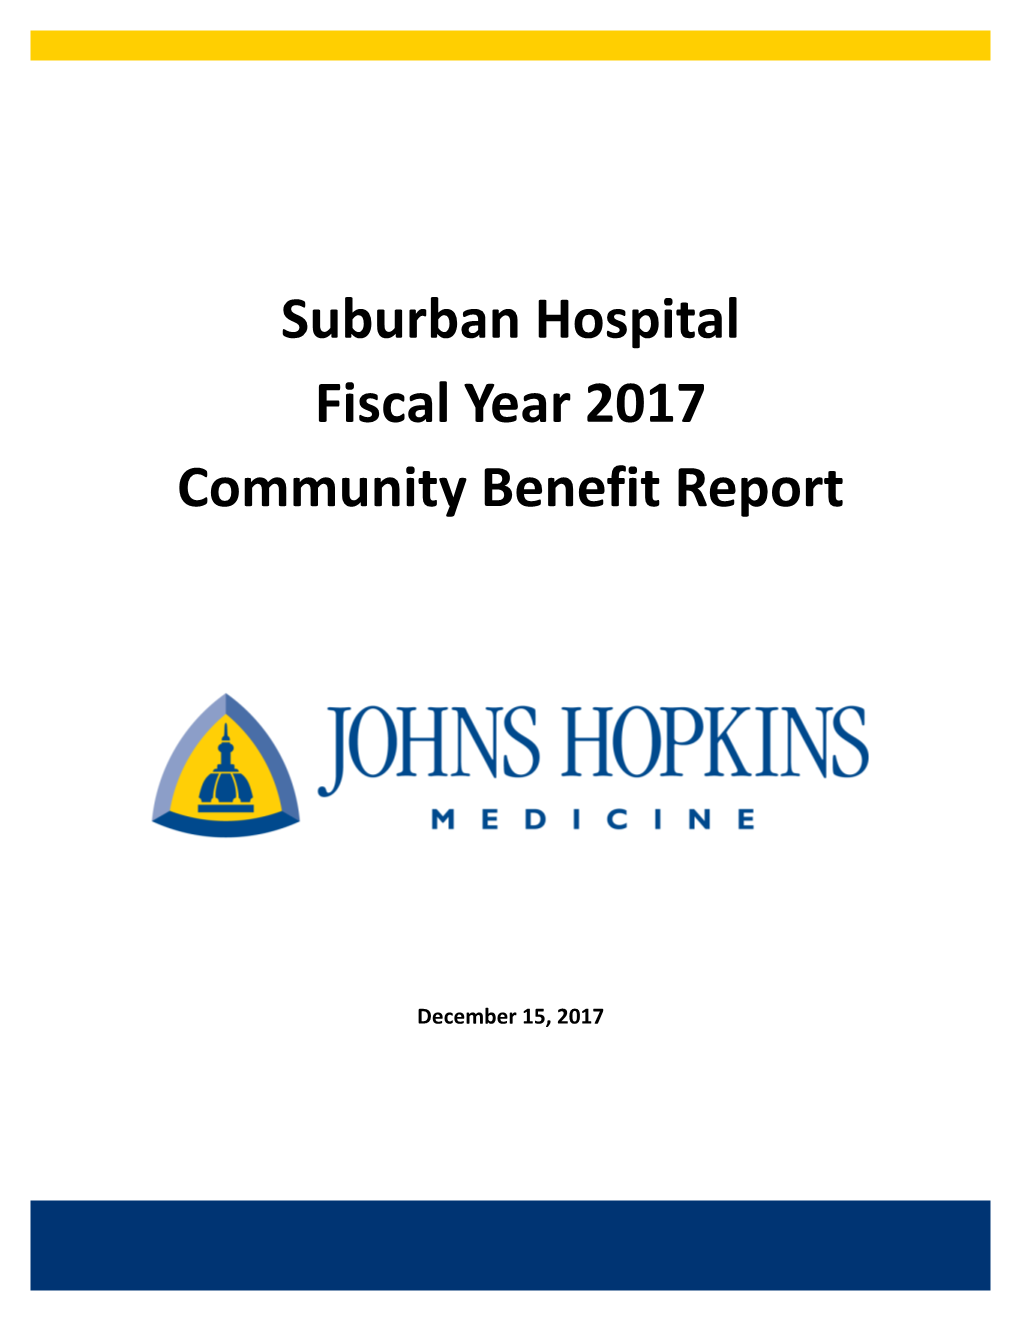 Suburban Hospital Fiscal Year 2017 Community Benefit Report